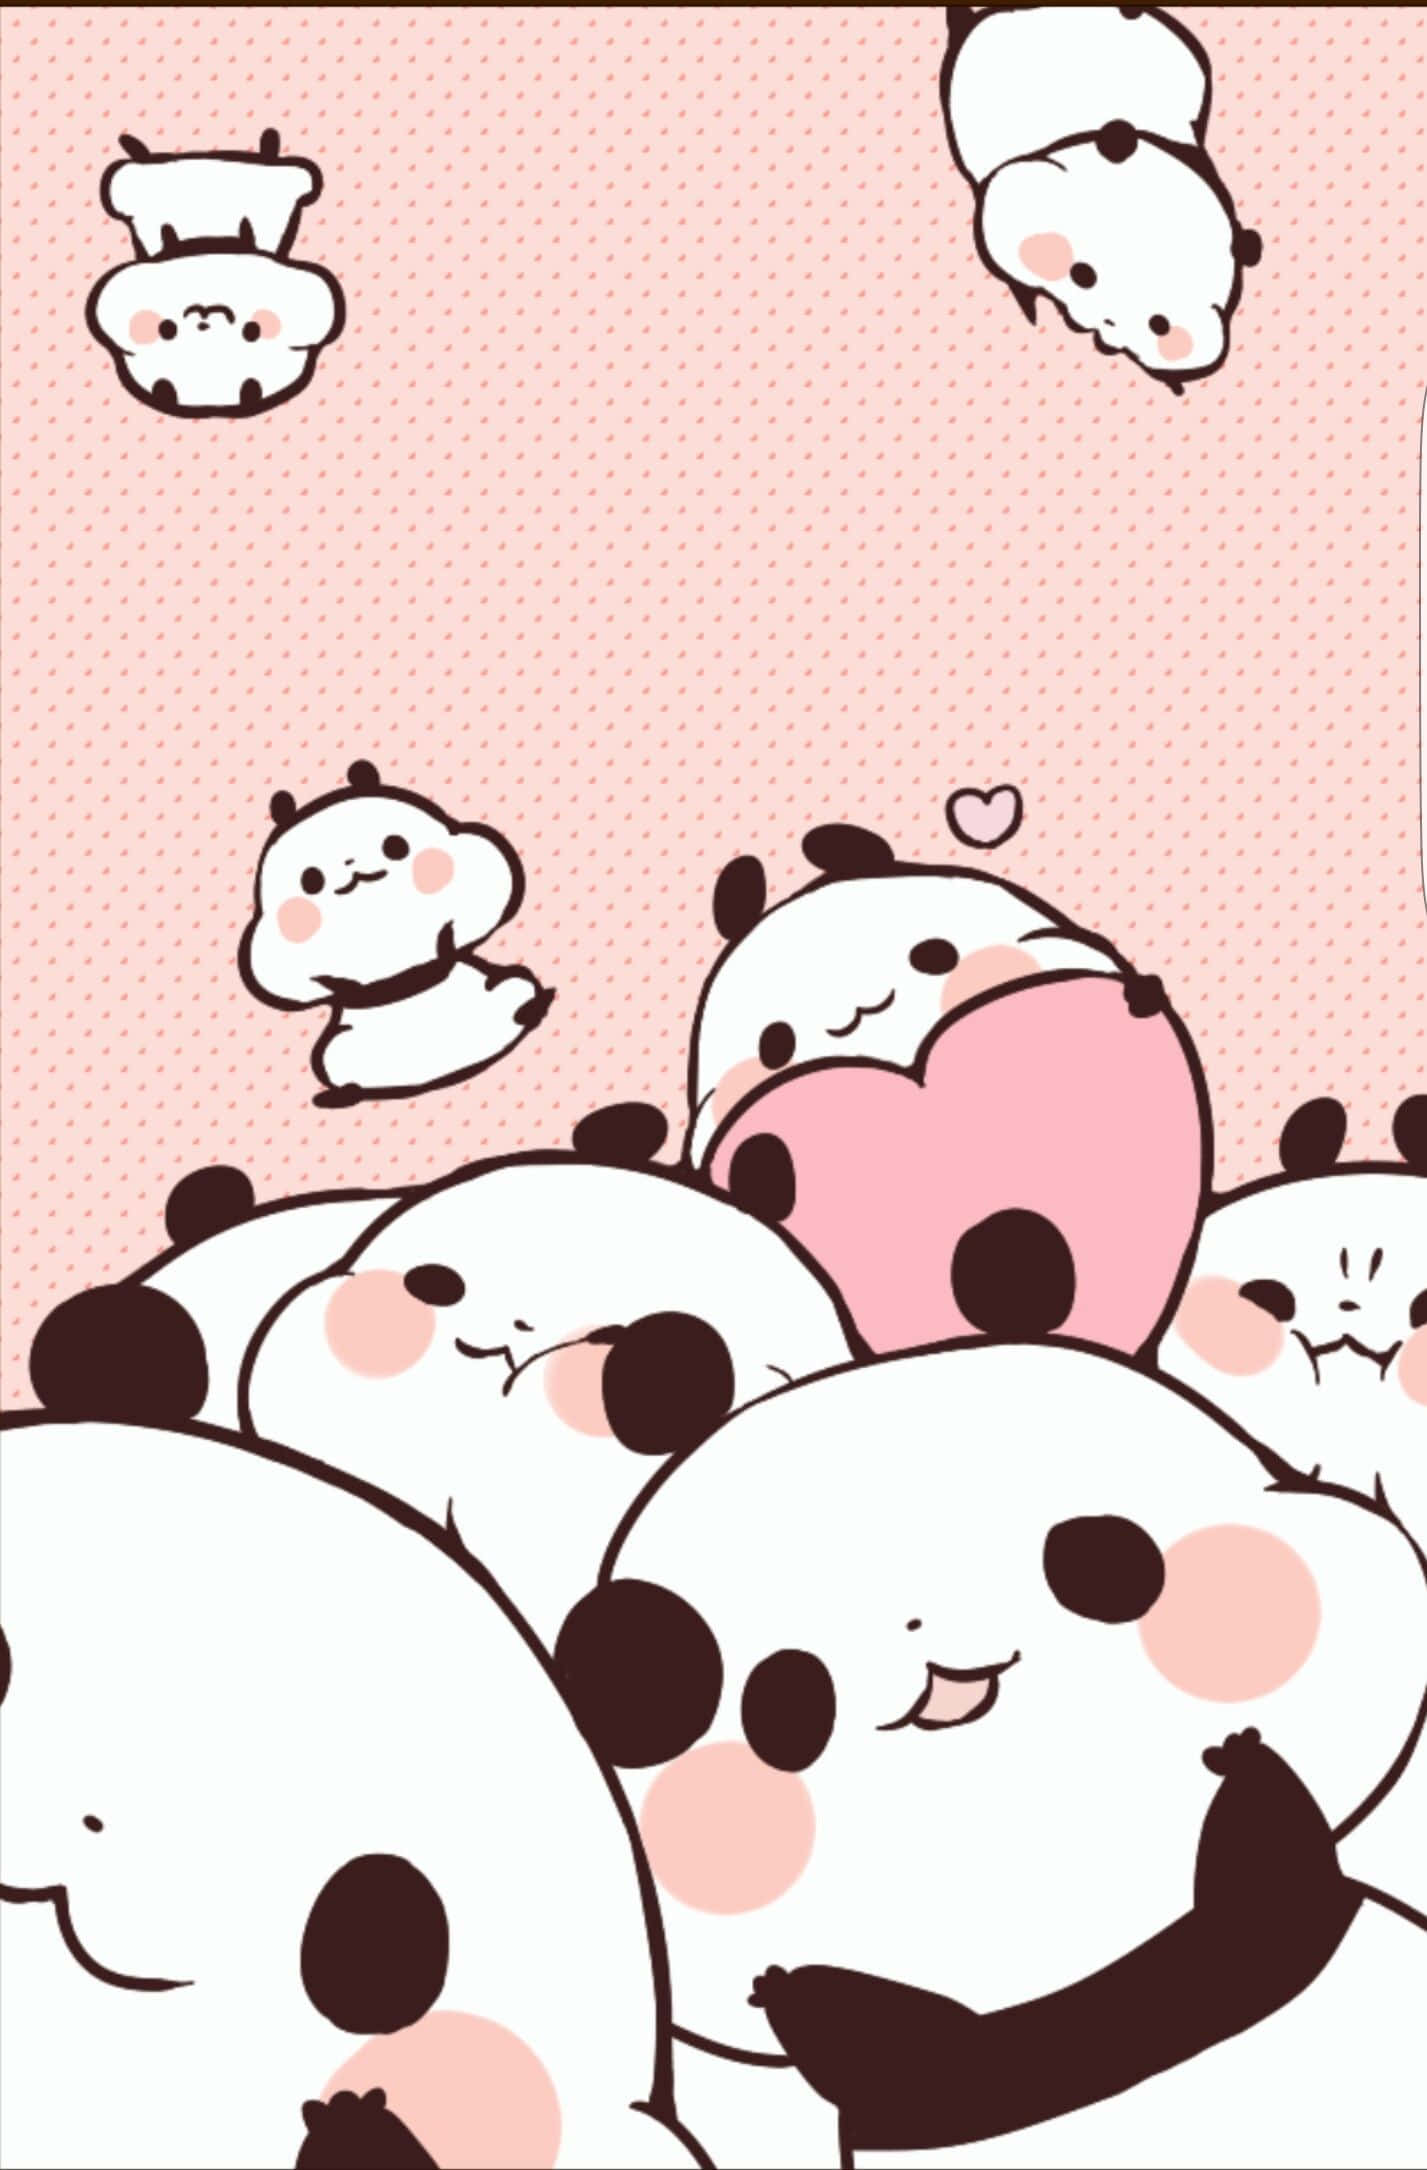 100+] Kawaii Panda Wallpapers